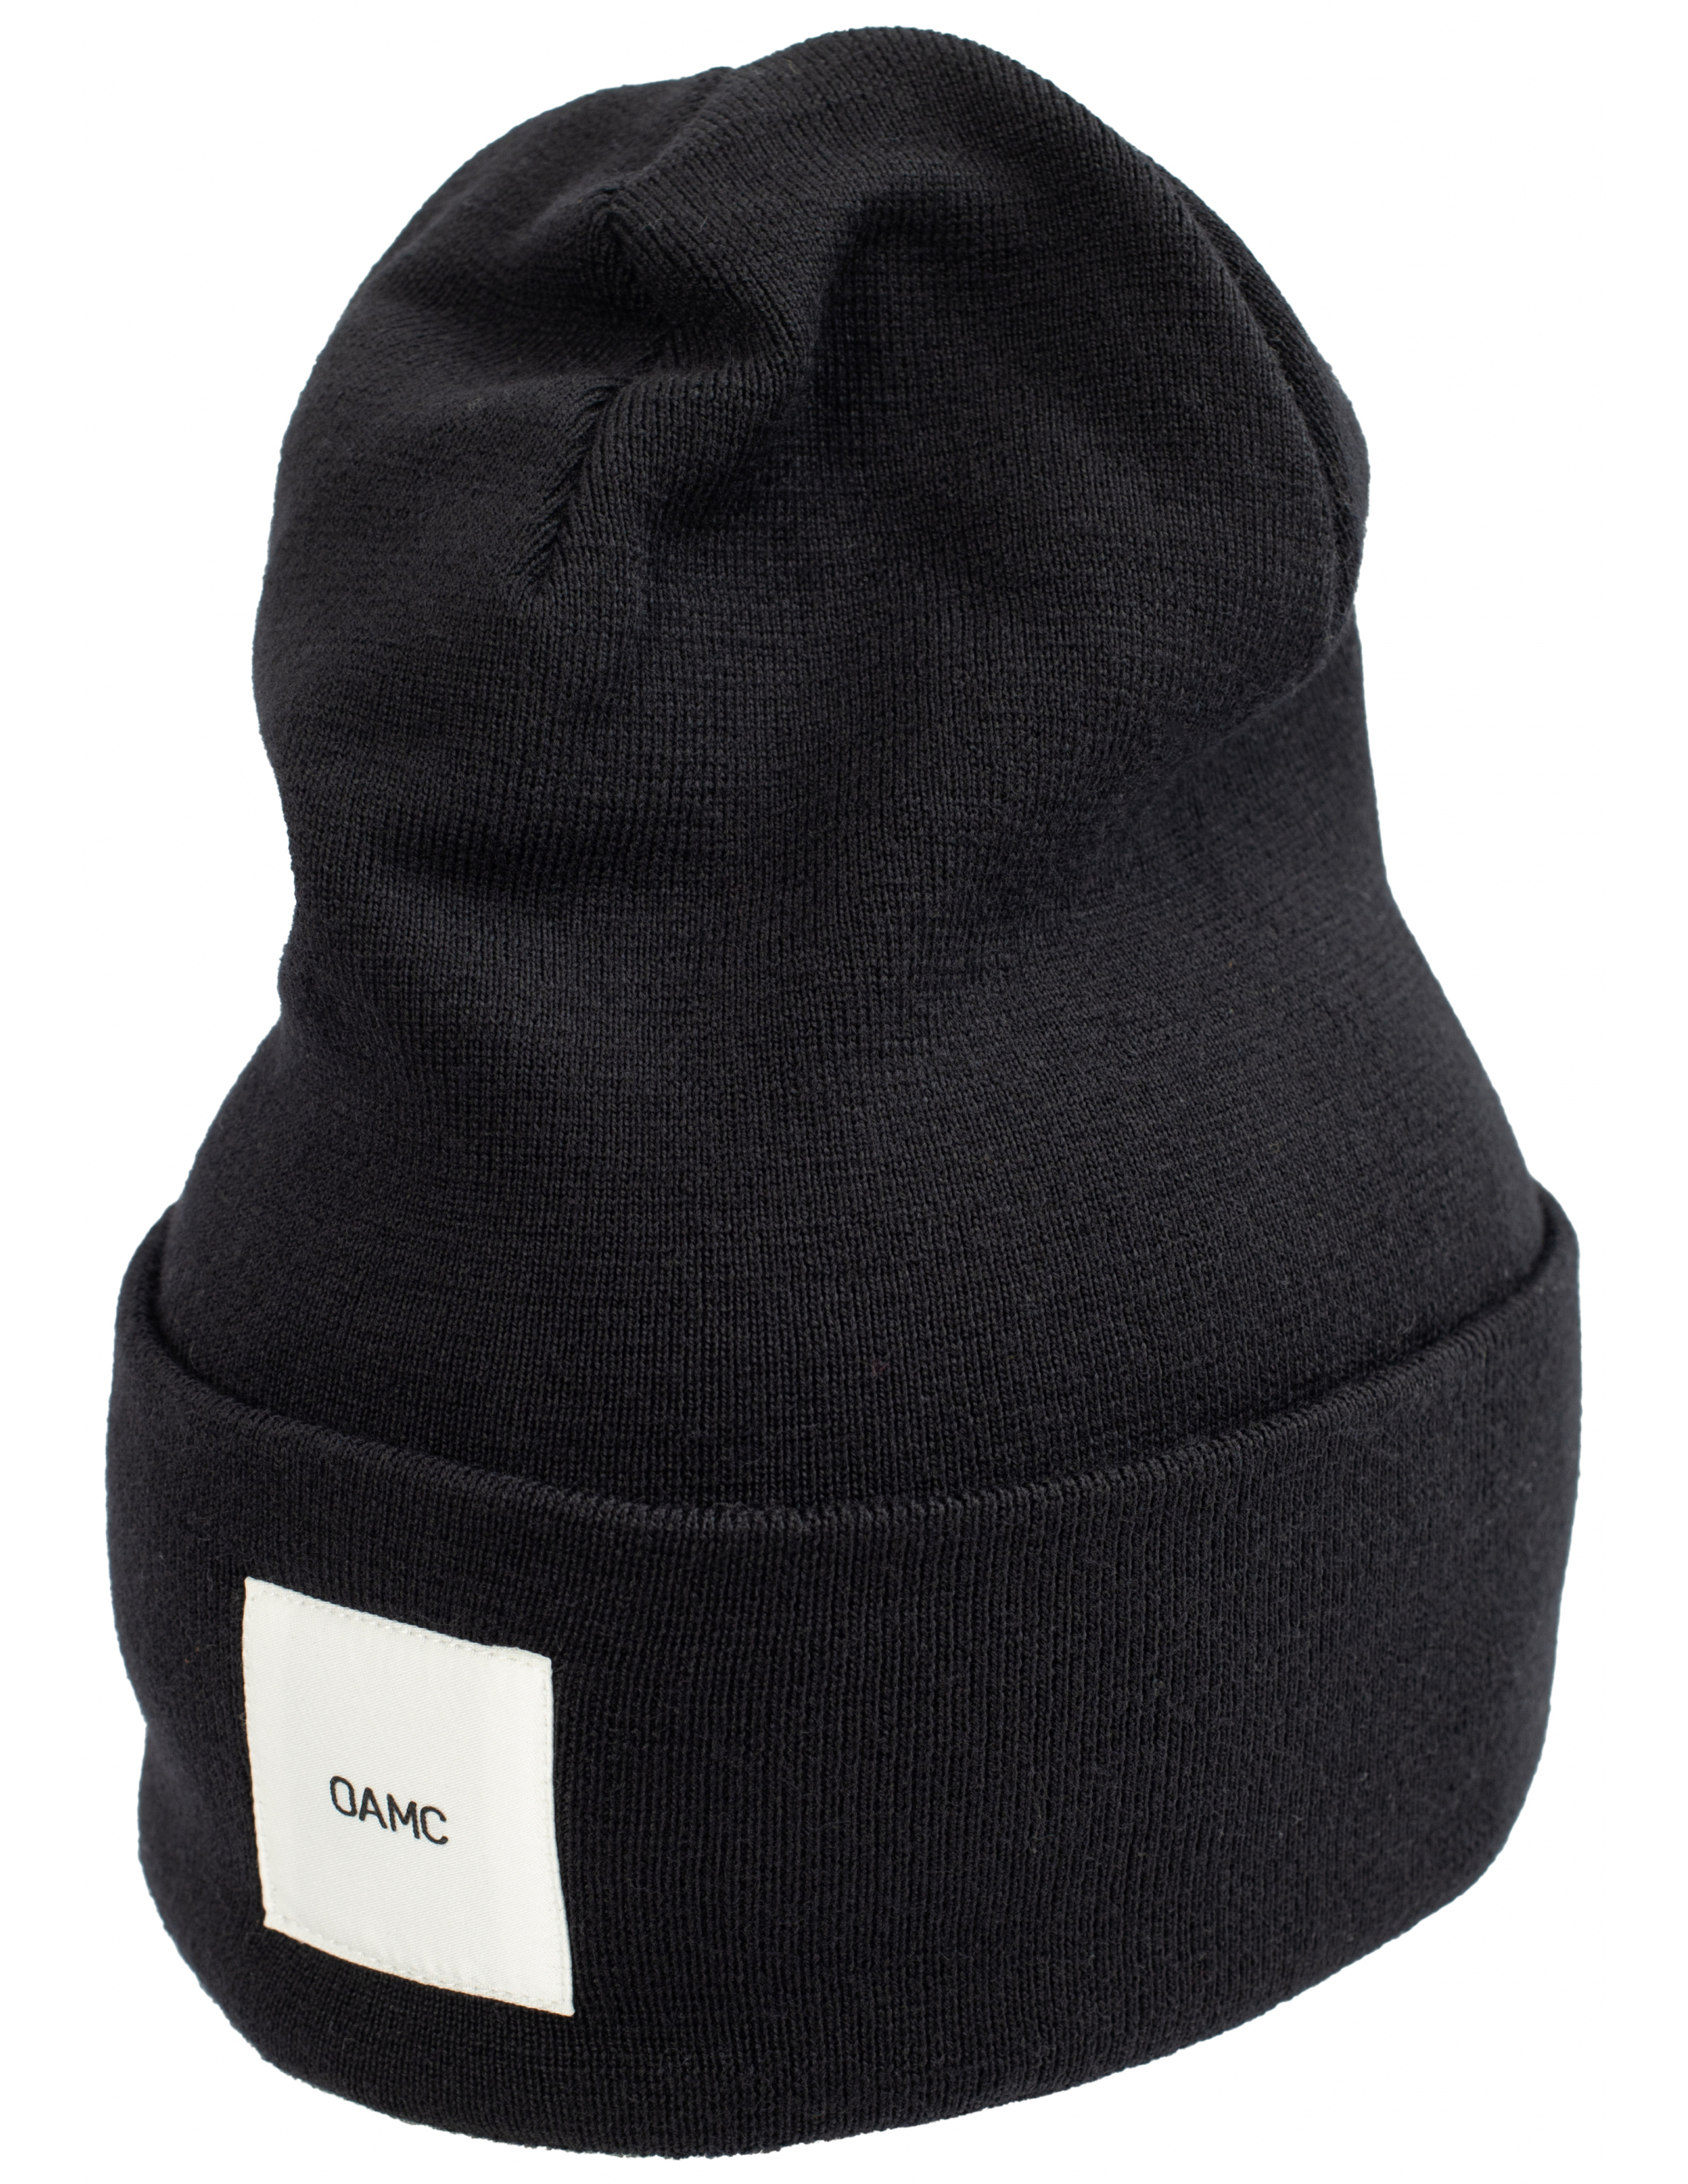 Черная шапка с патчем OAMC OABT752267/OTY20001/001, размер One Size OABT752267/OTY20001/001 - фото 2